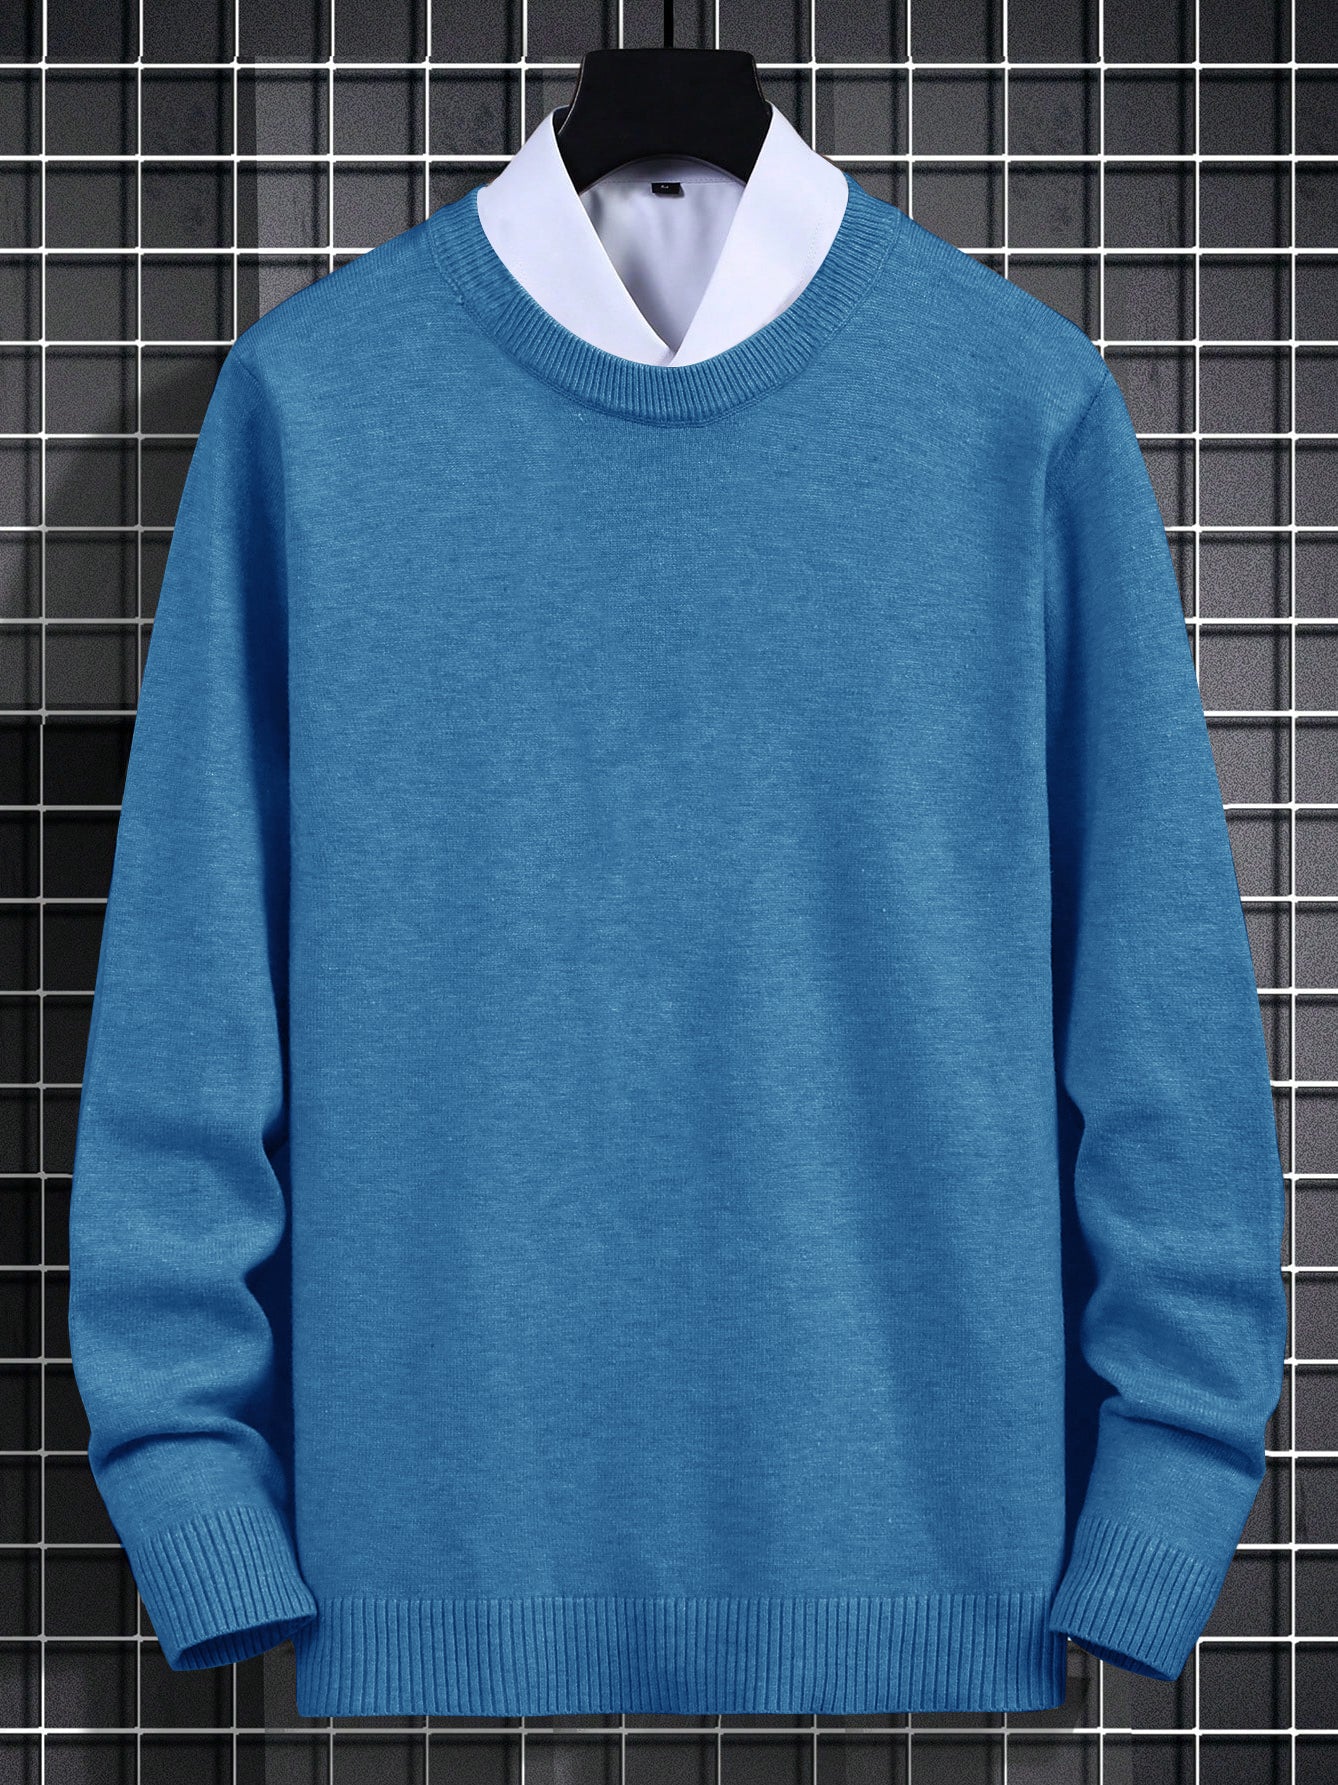 Aardo Fashion Crew Neck Wool Sweater For Men-Blue-SP1159/RT2283